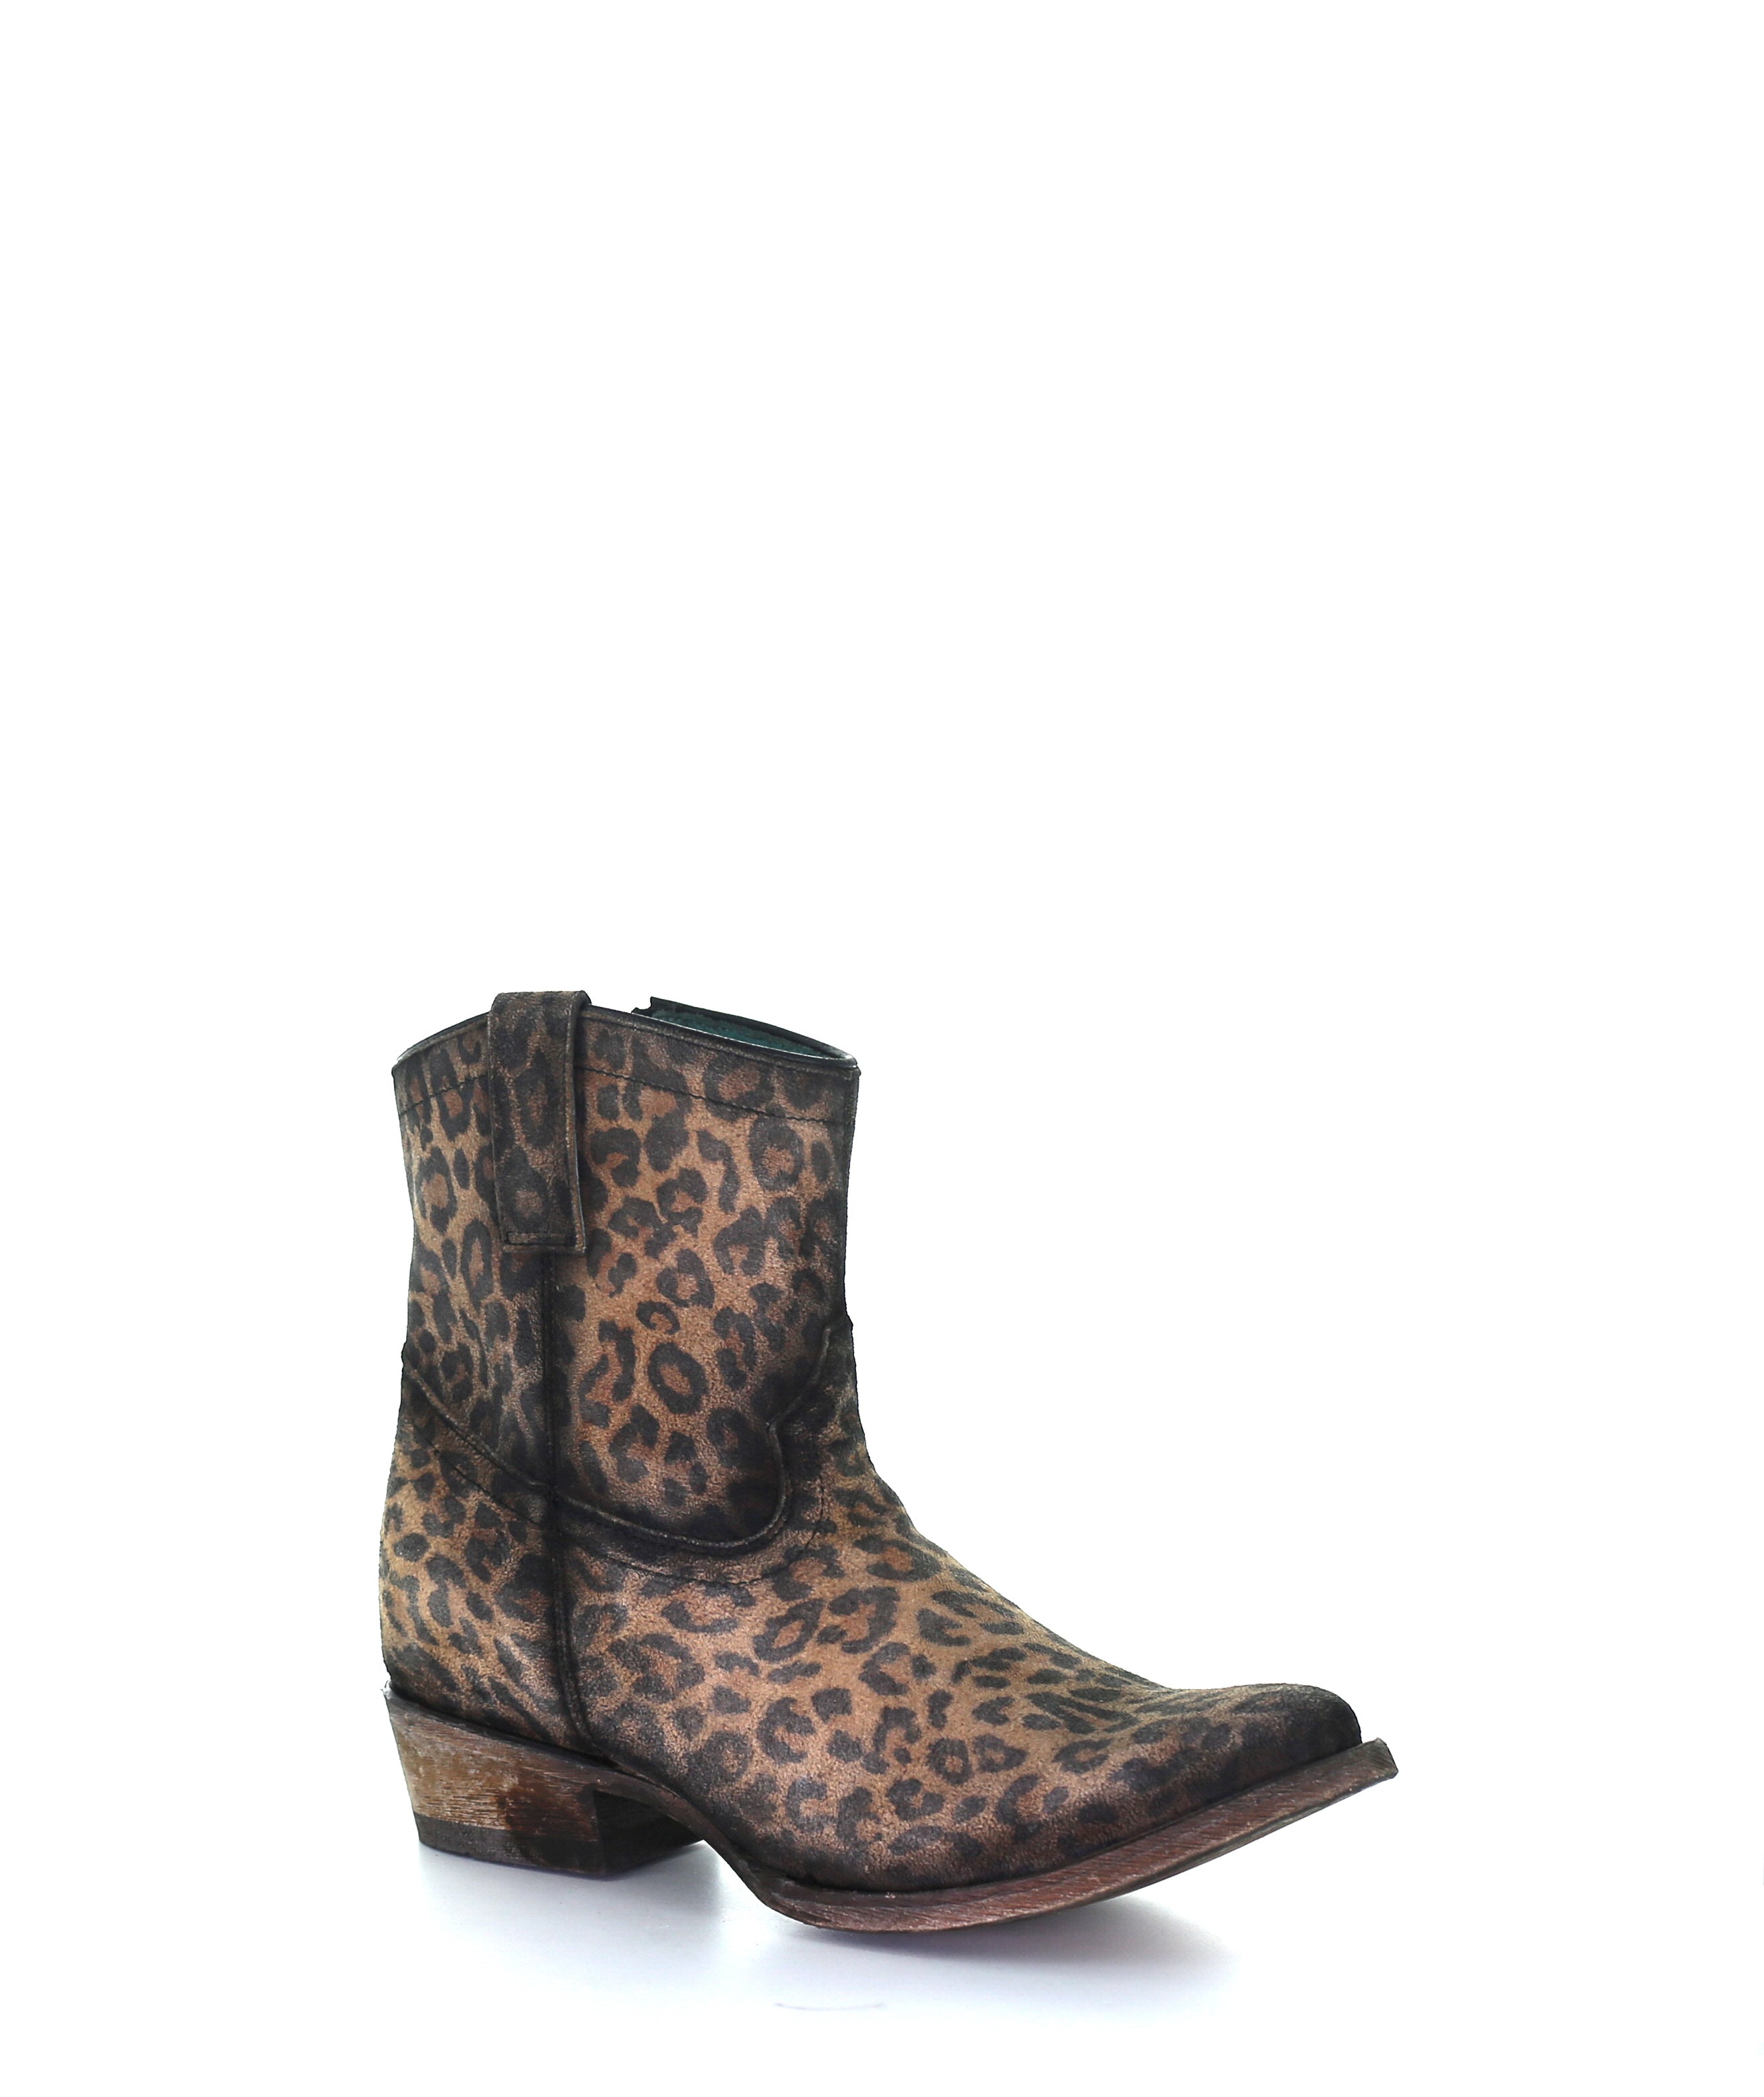 Ladies Leopard Print Zipper Ankle Boot